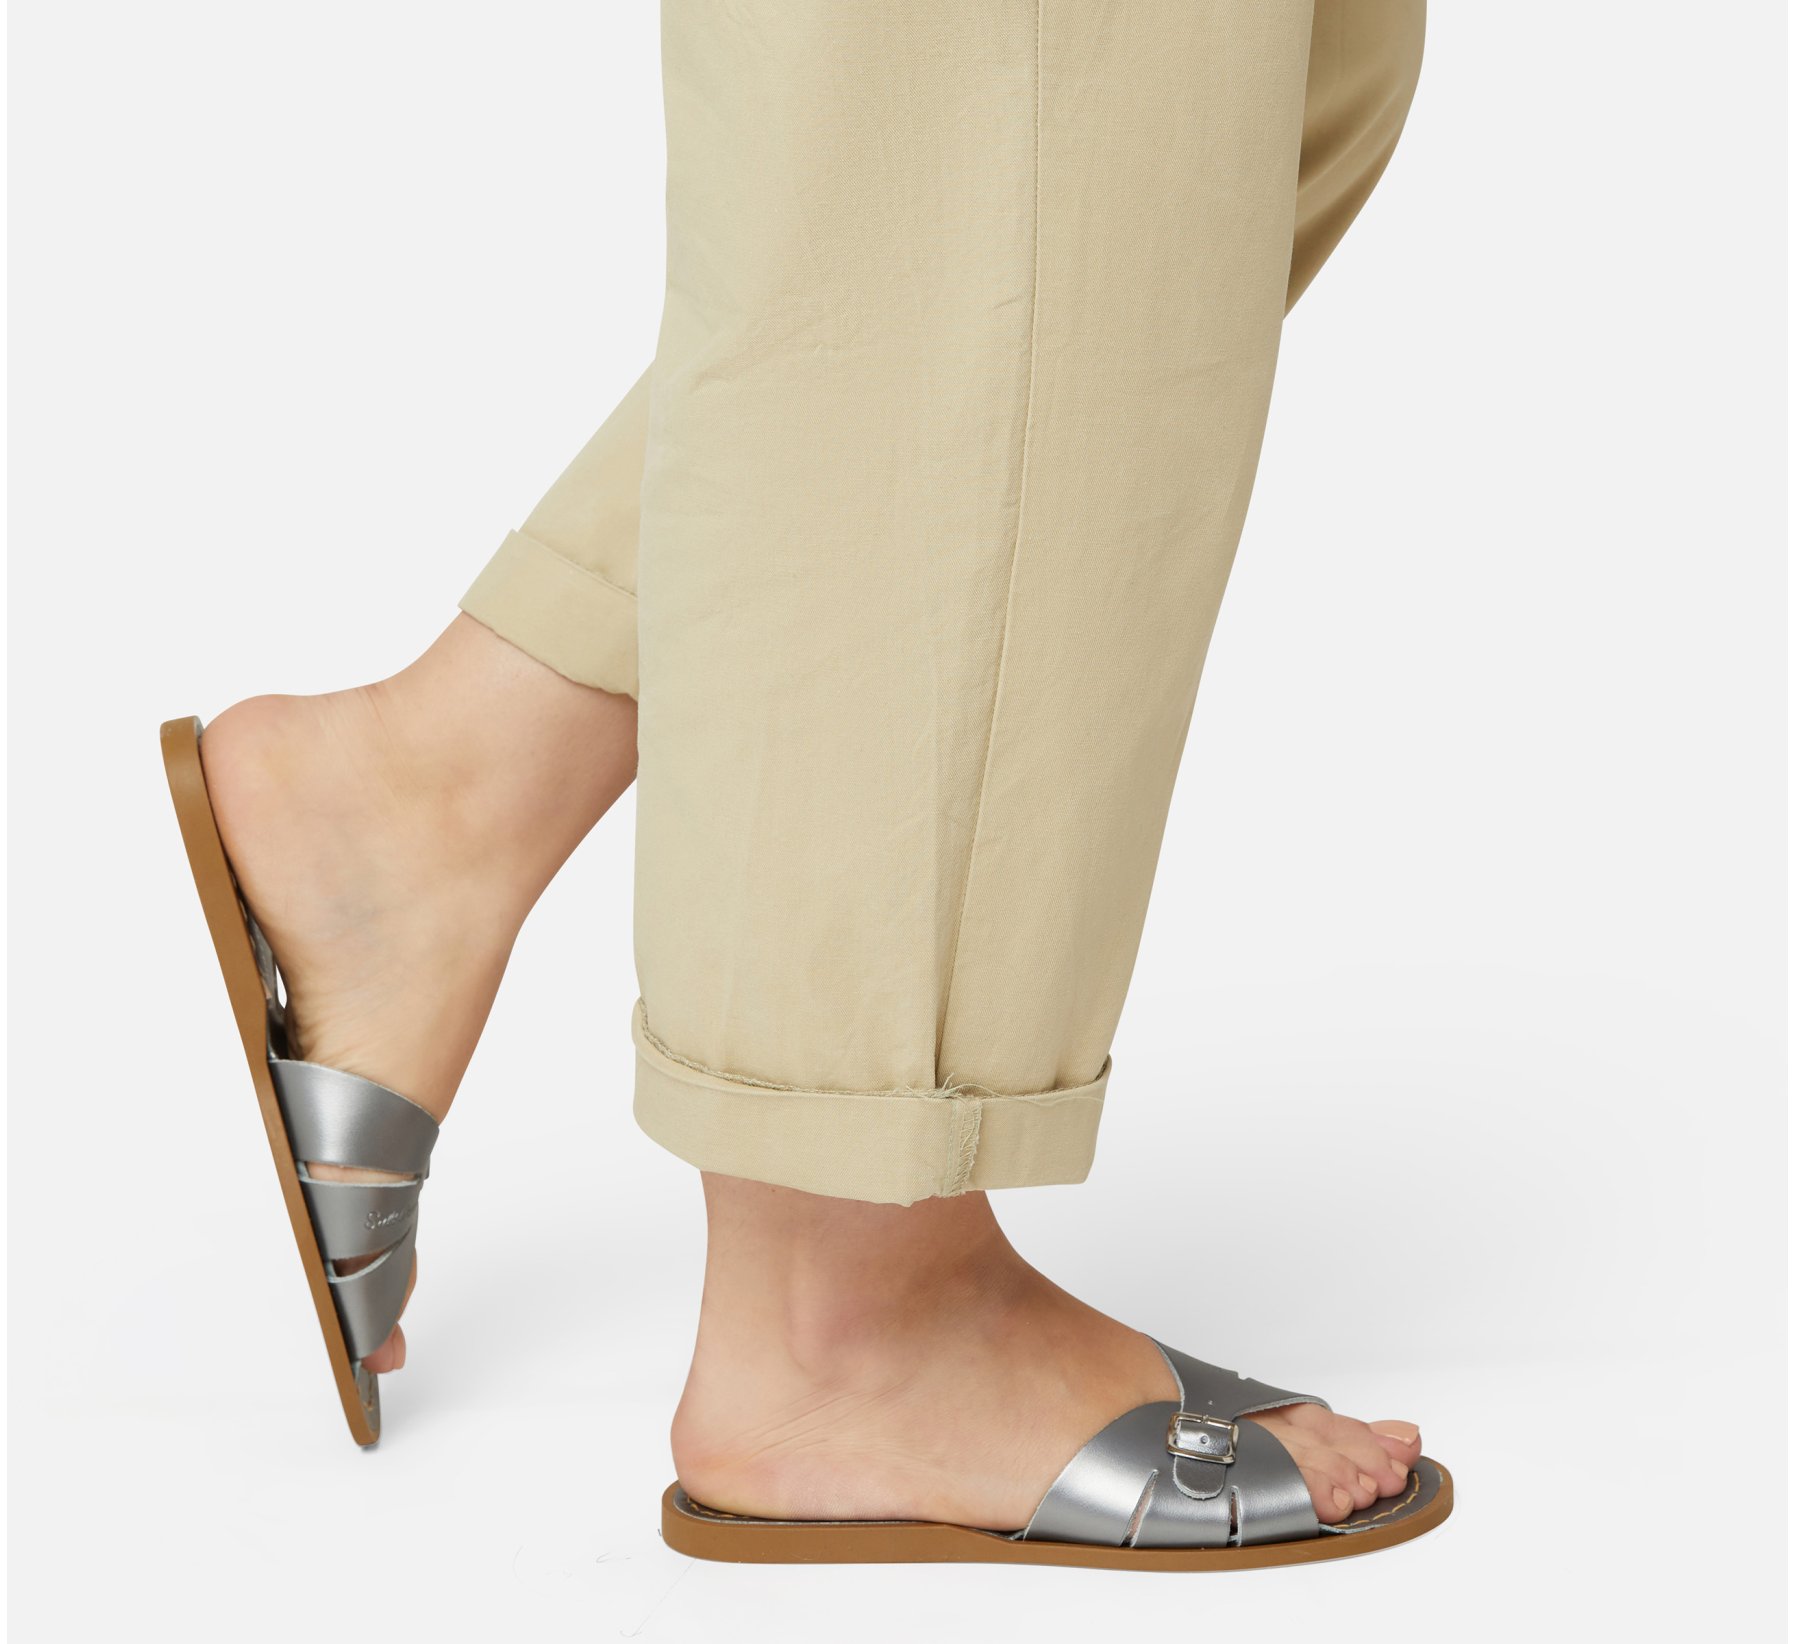 Classic Slide Pewter Sandal - Salt Water Sandals